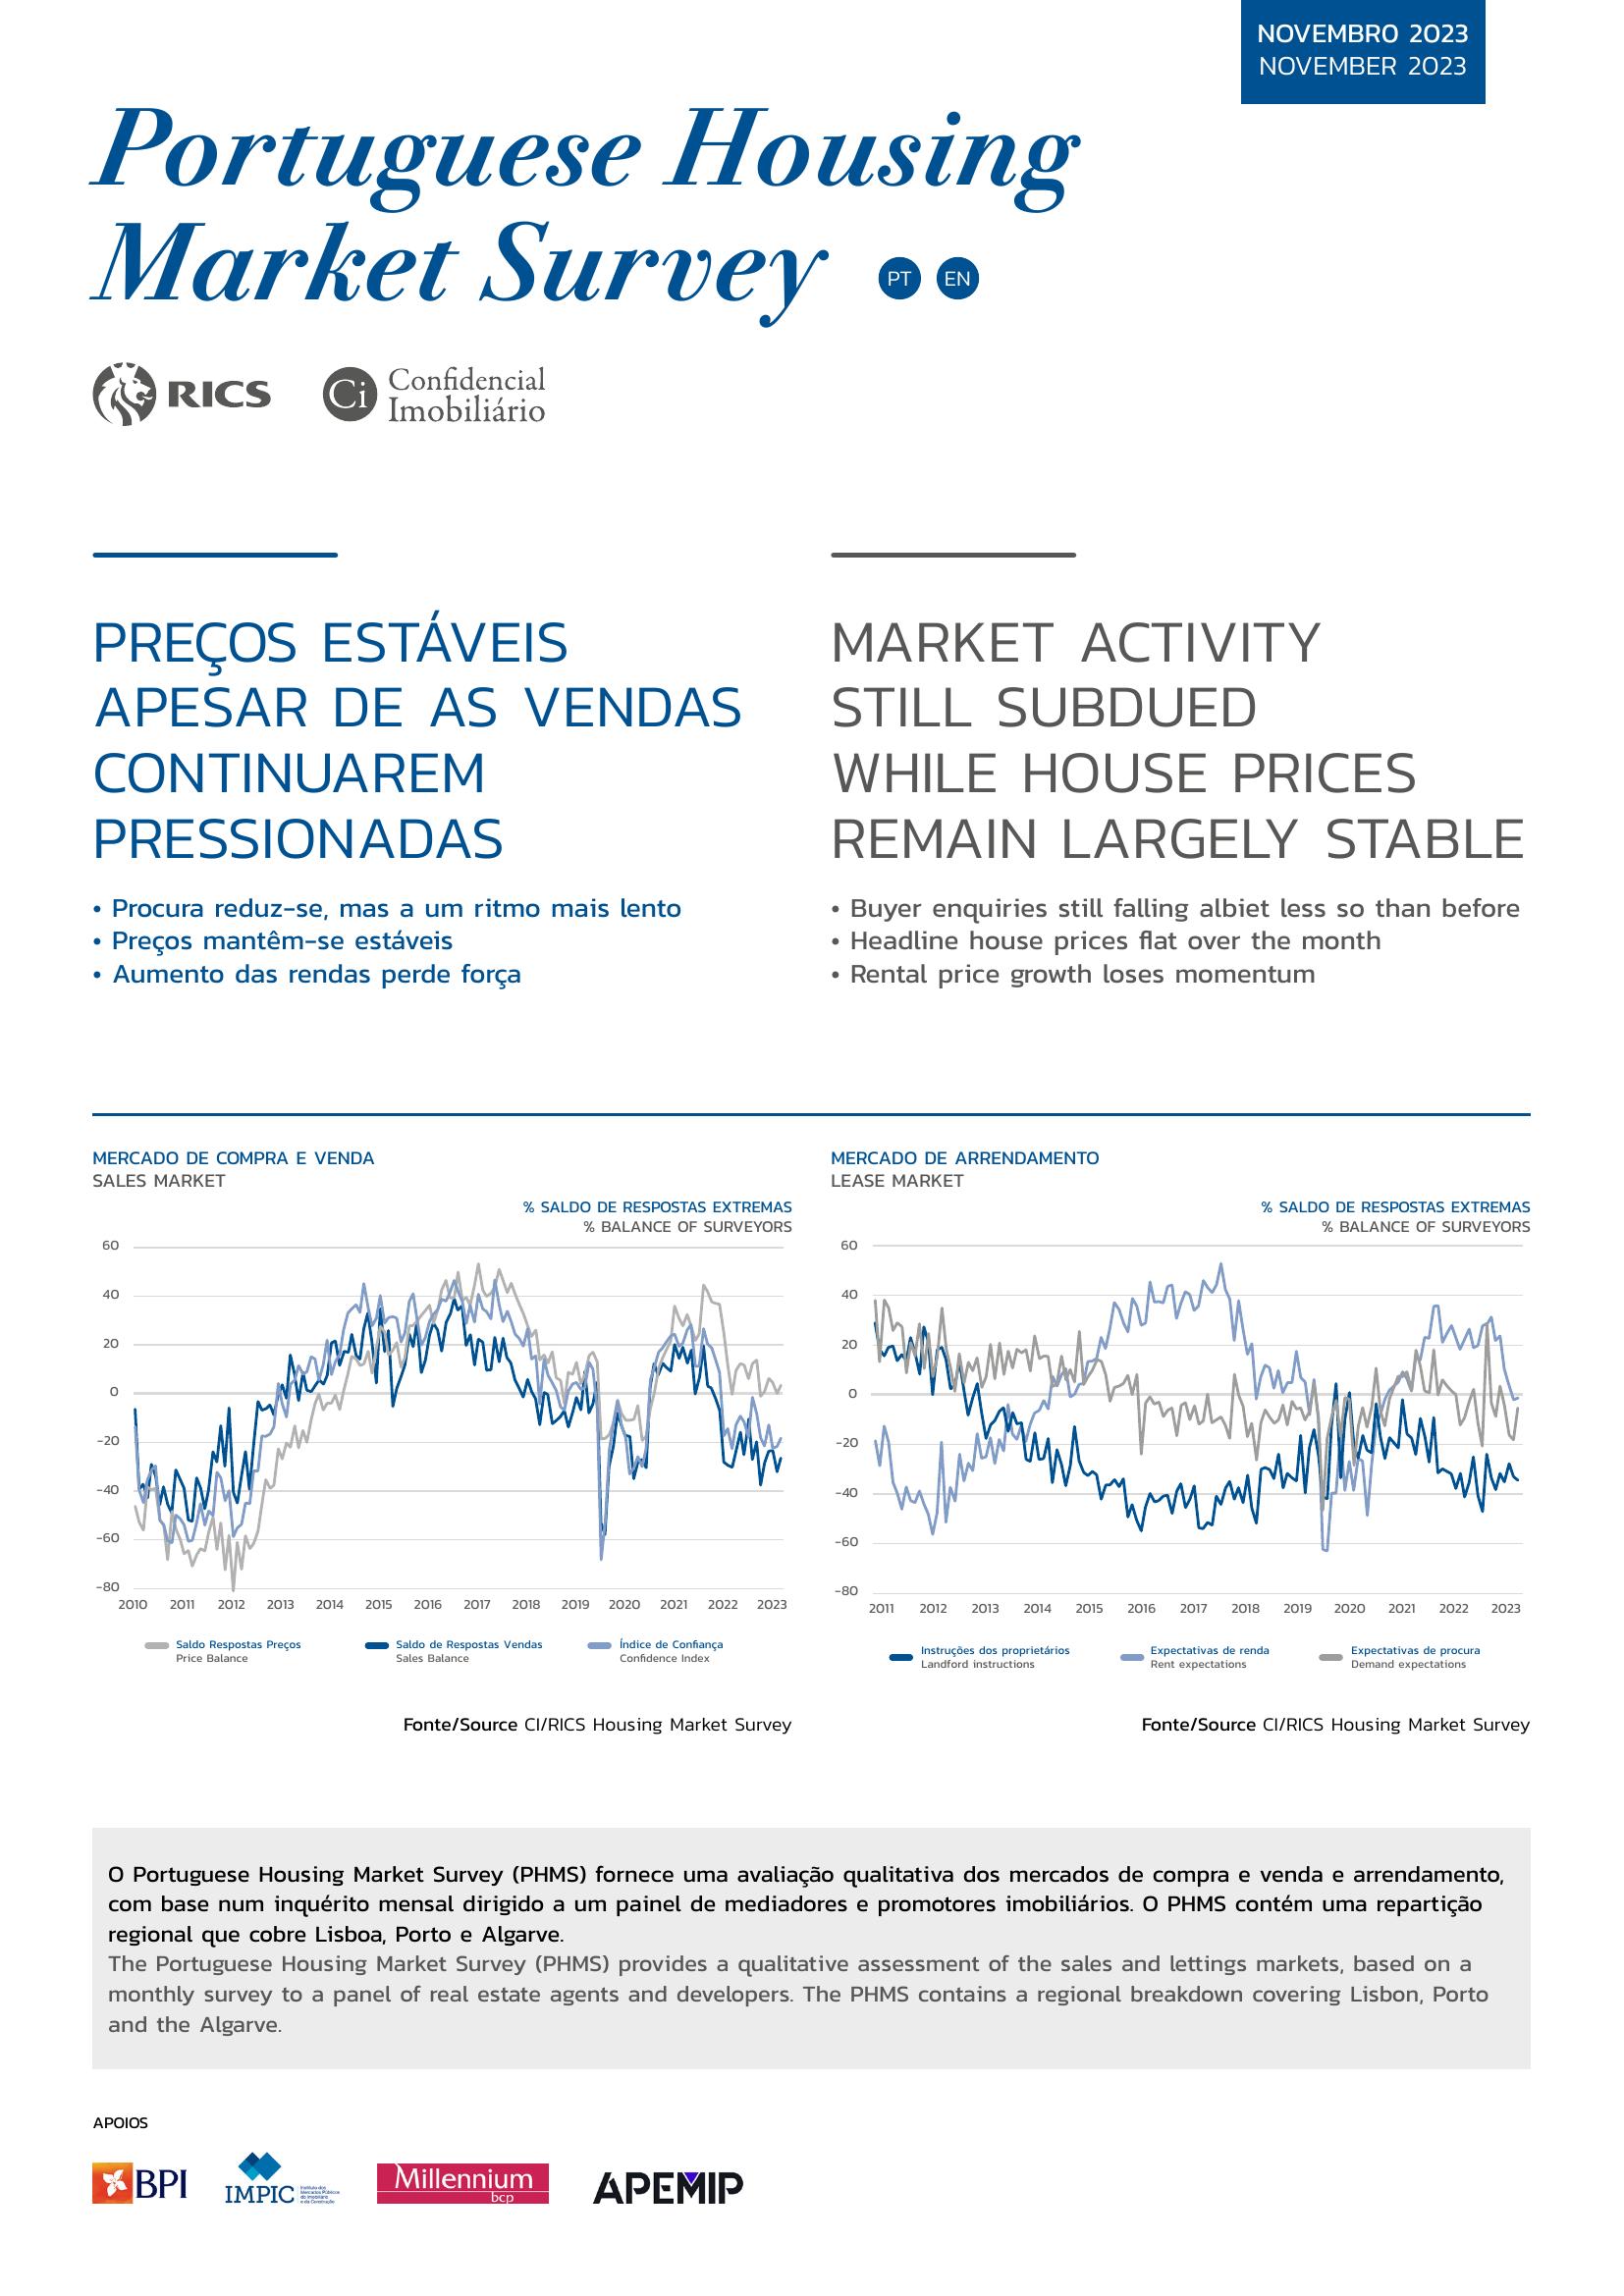 Portuguese Housing Market Survey Novembro 2023 Confidencial Imobiliário